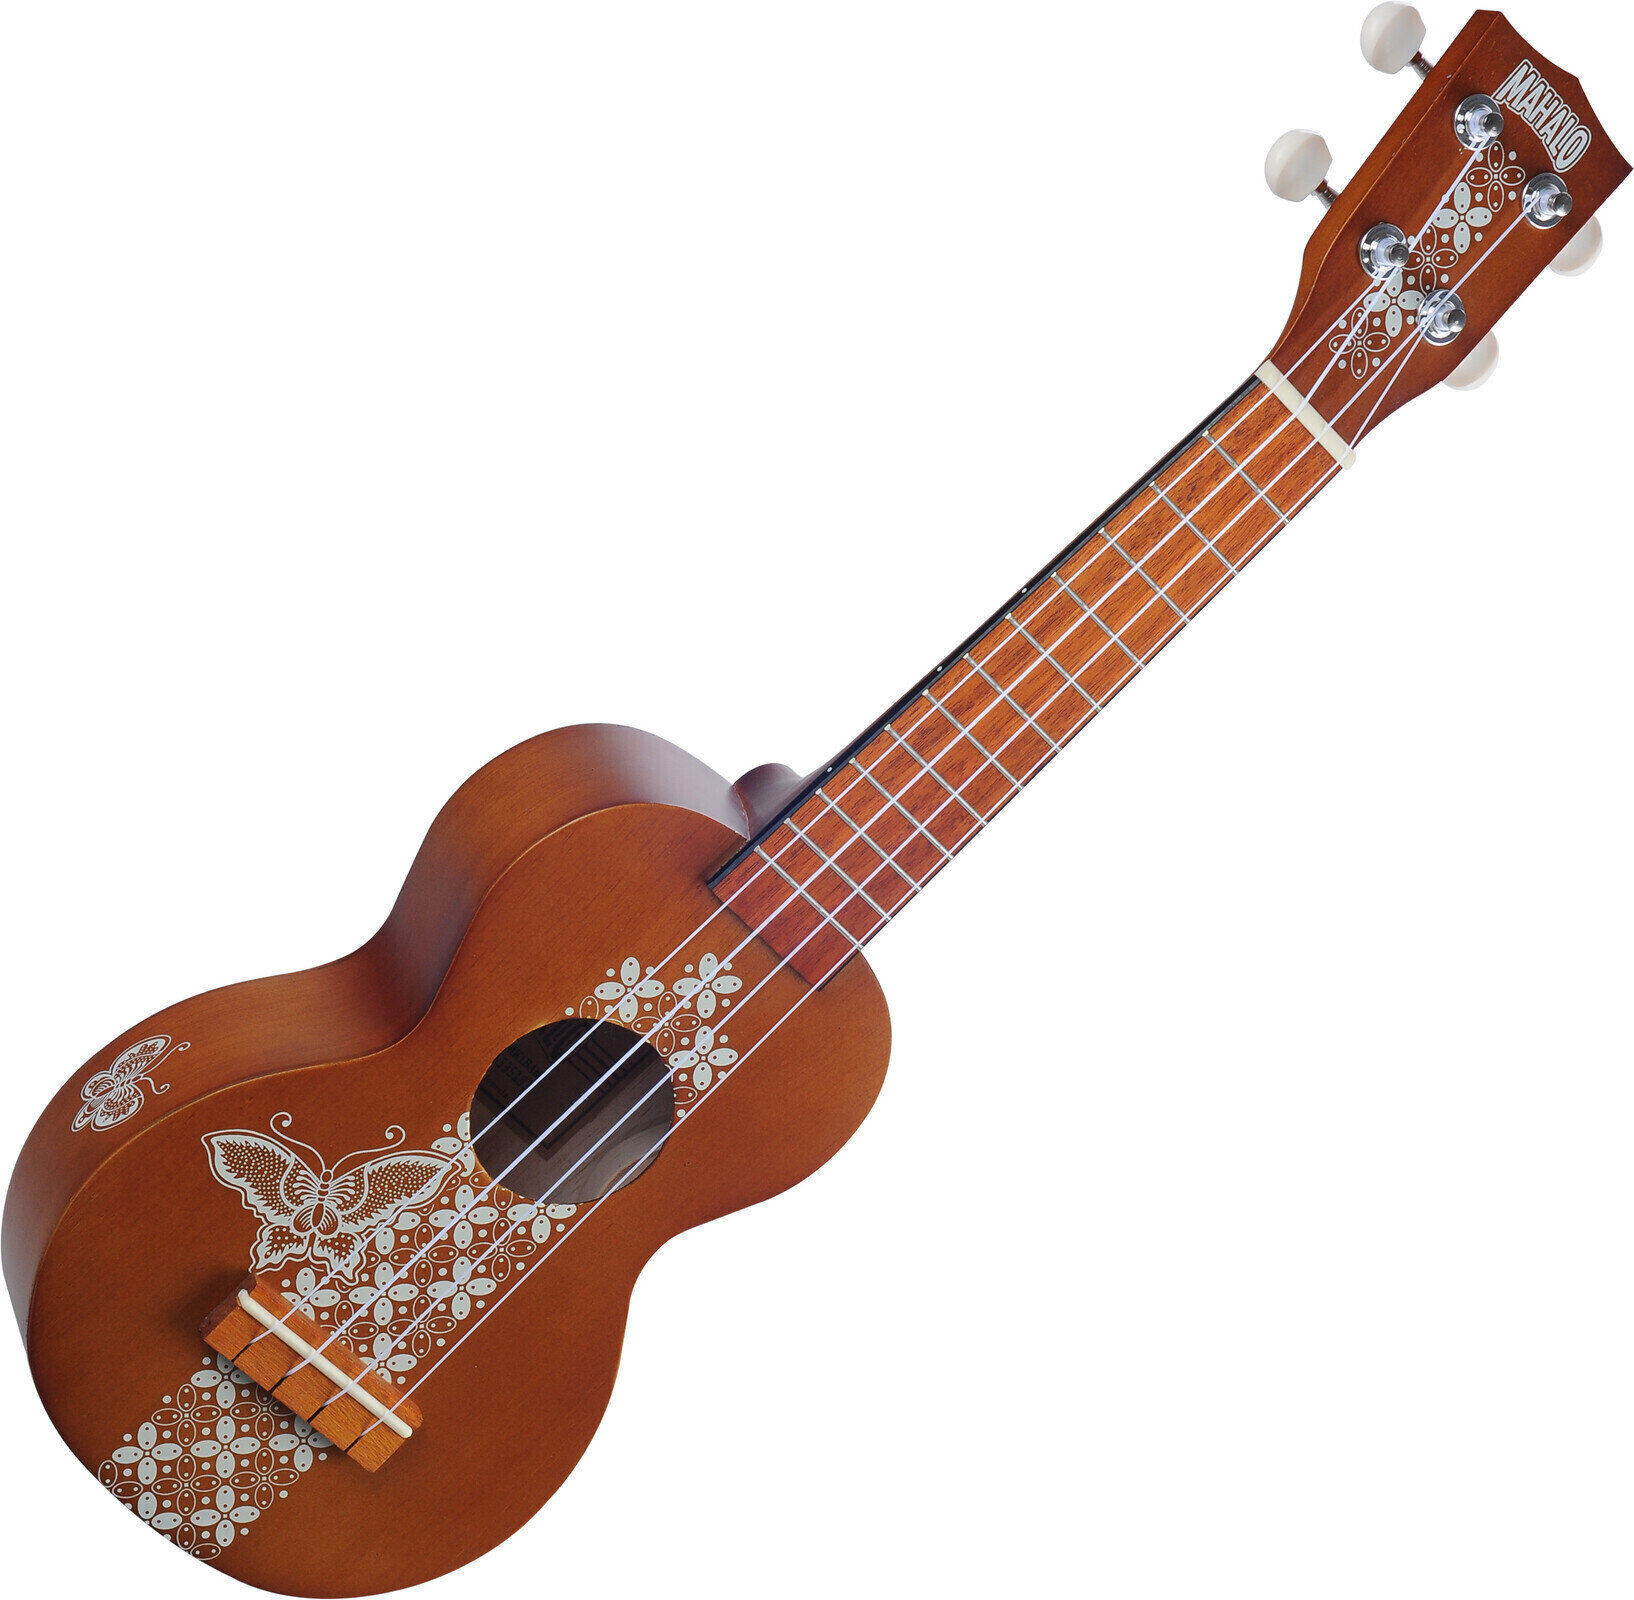 Szoprán ukulele Mahalo MK1BA Szoprán ukulele Batik Transparent Brown